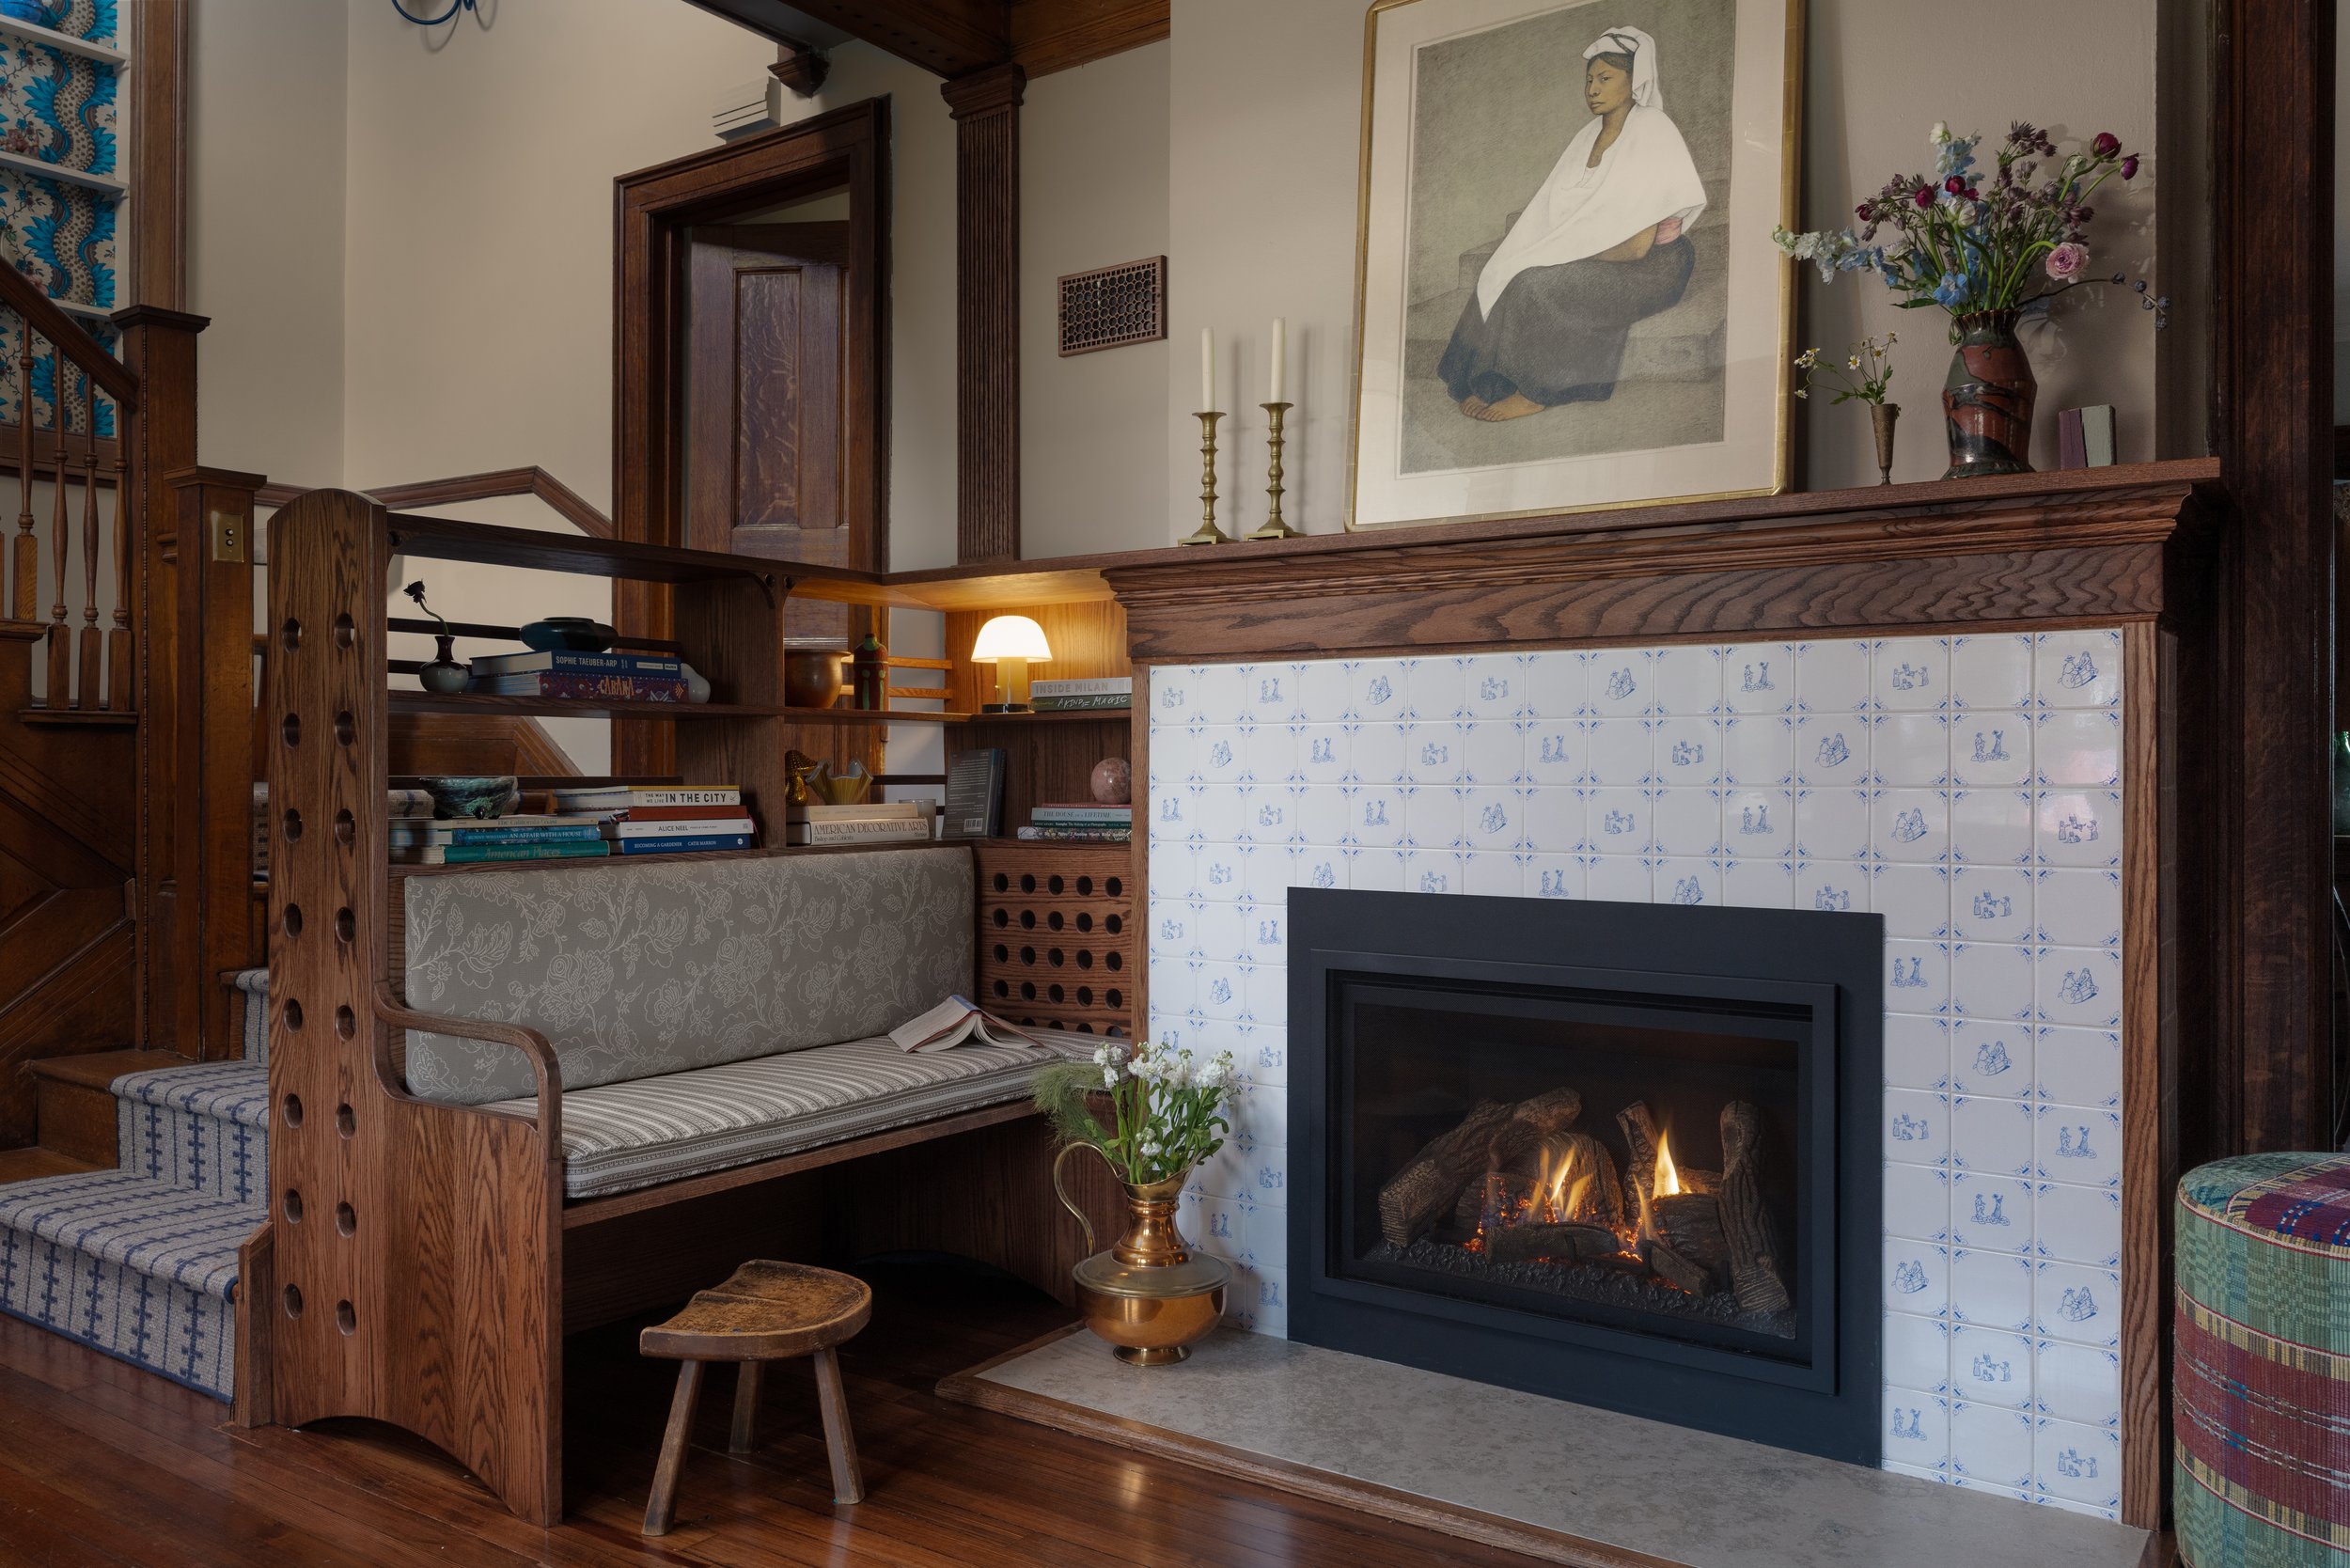 Copy of 3 - Living room fireplace.jpg